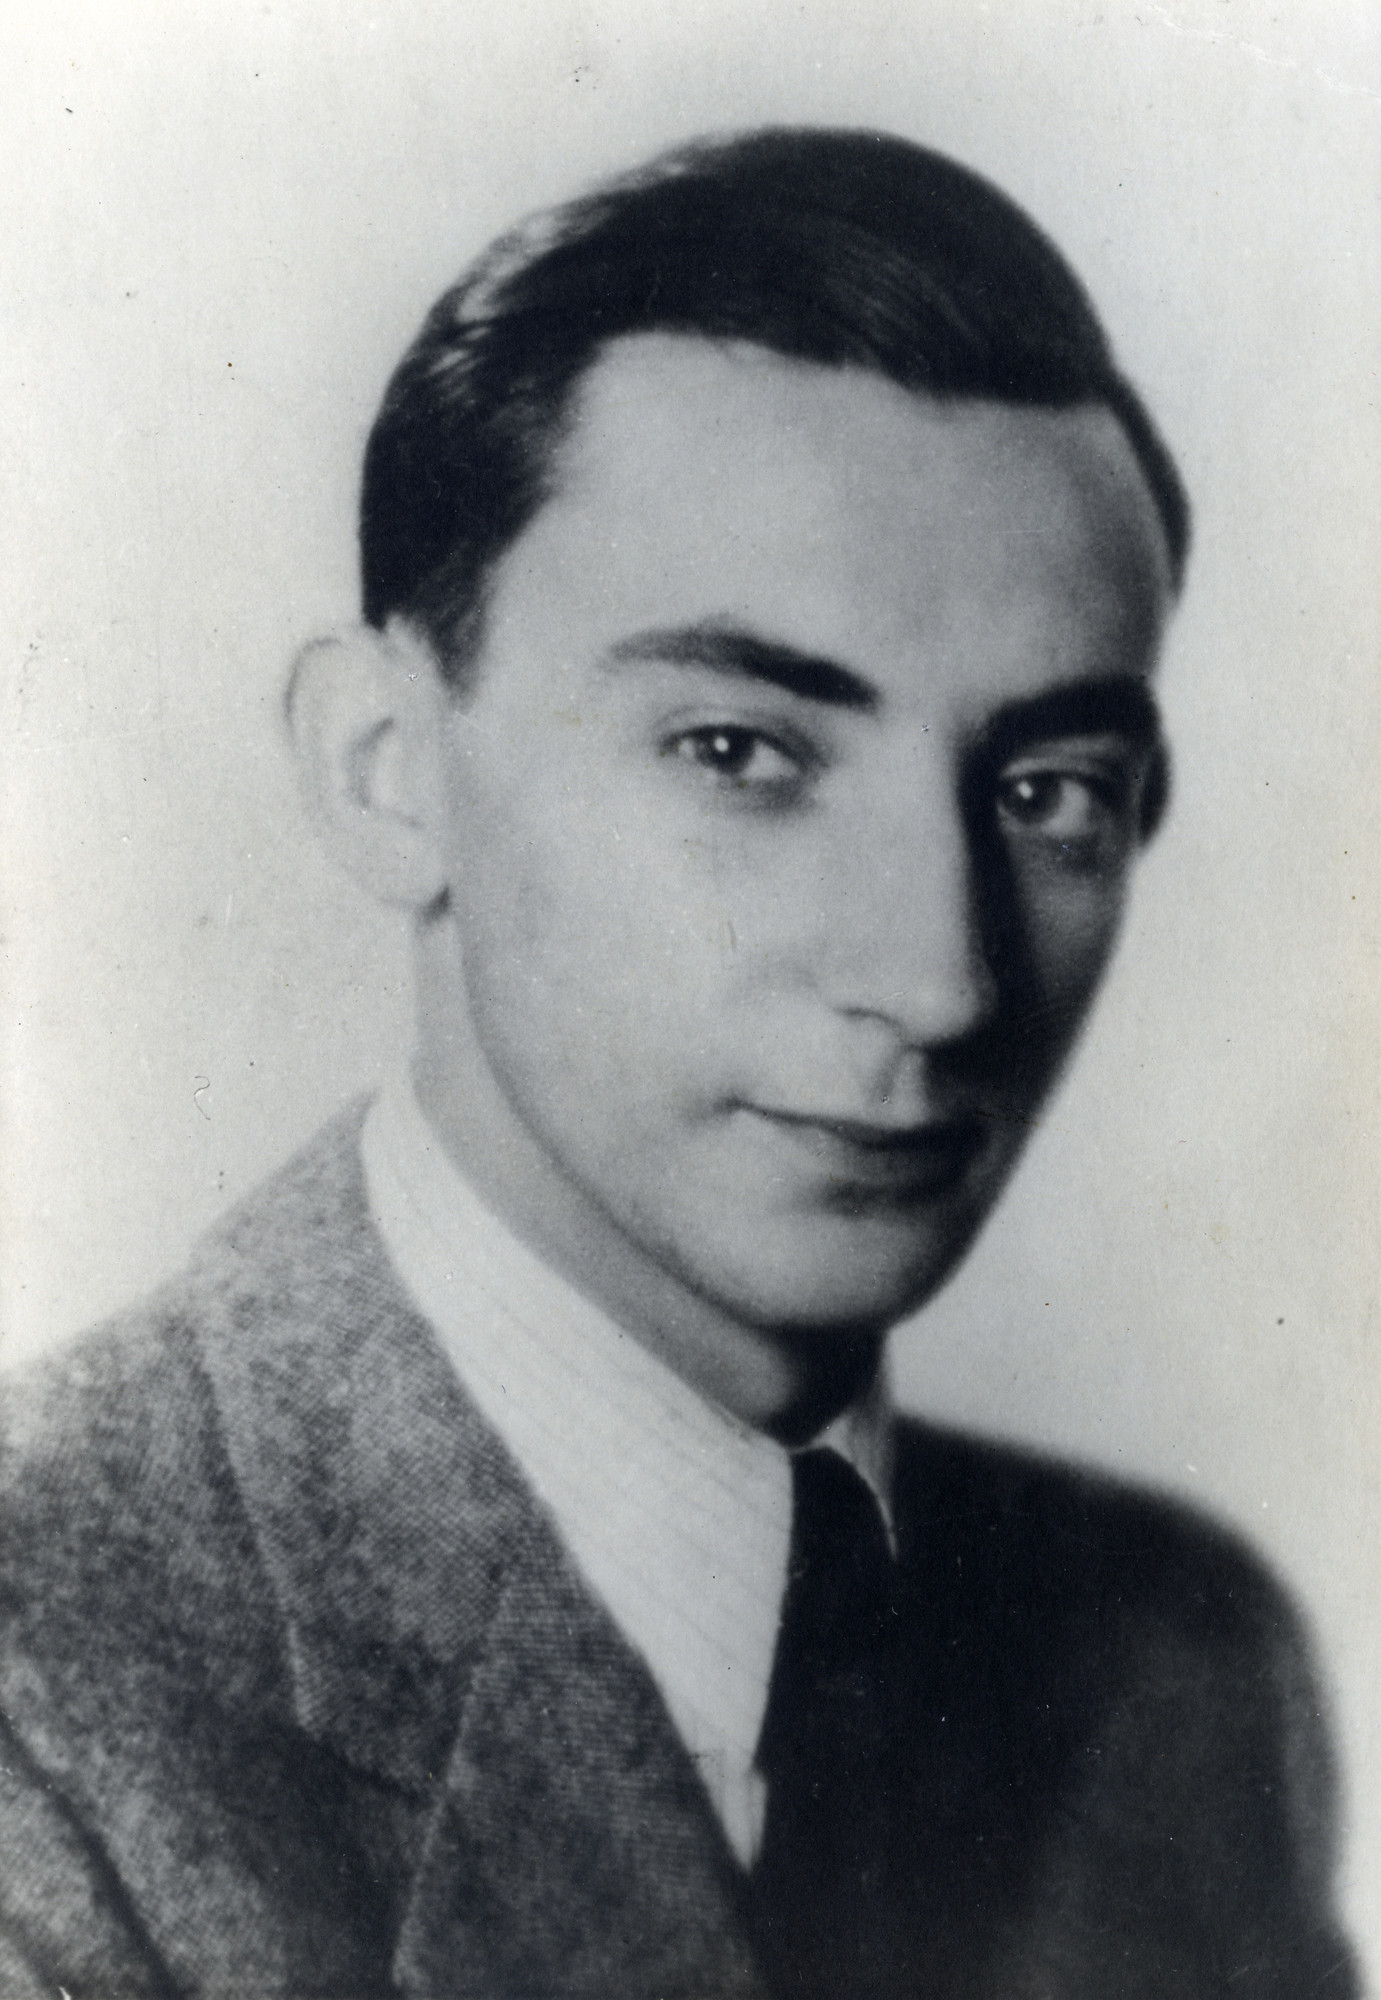 Studio portrait of Kuba Weber (nephew to Henryk Graubart).

Kuba perished in the Holocaust.